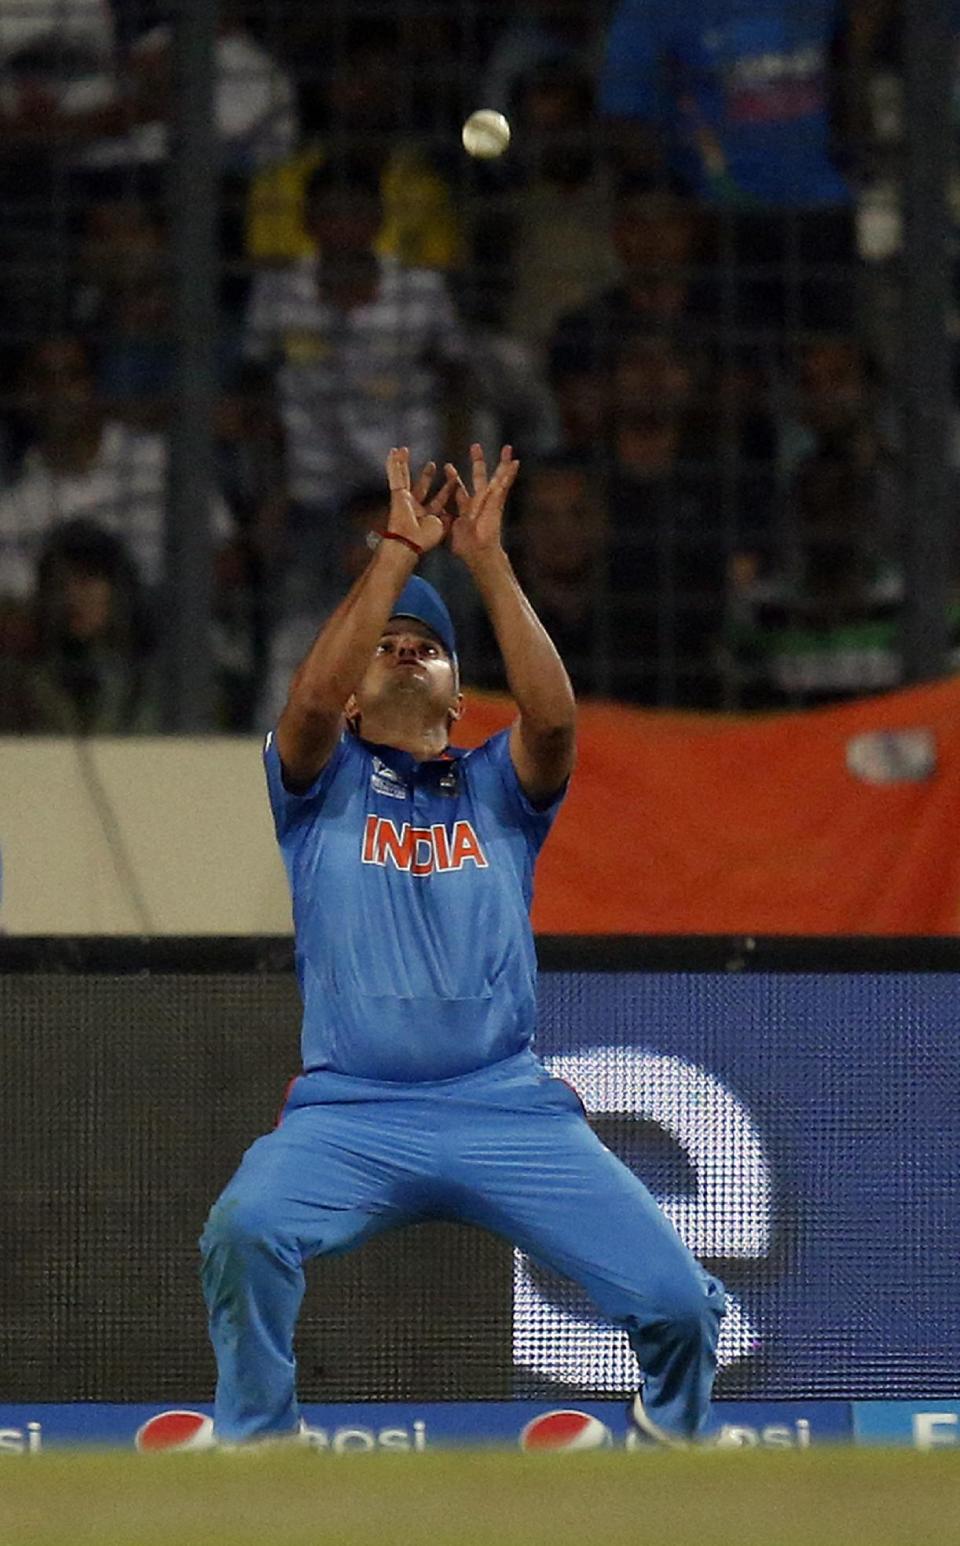 India's Suresh Raina prepares to take the catch to dismiss Pakistan's Umar Akmal during their ICC Twenty20 Cricket World Cup match in Dhaka, Bangladesh, Friday, March 21, 2014. (AP Photo/Aijaz Rahi)